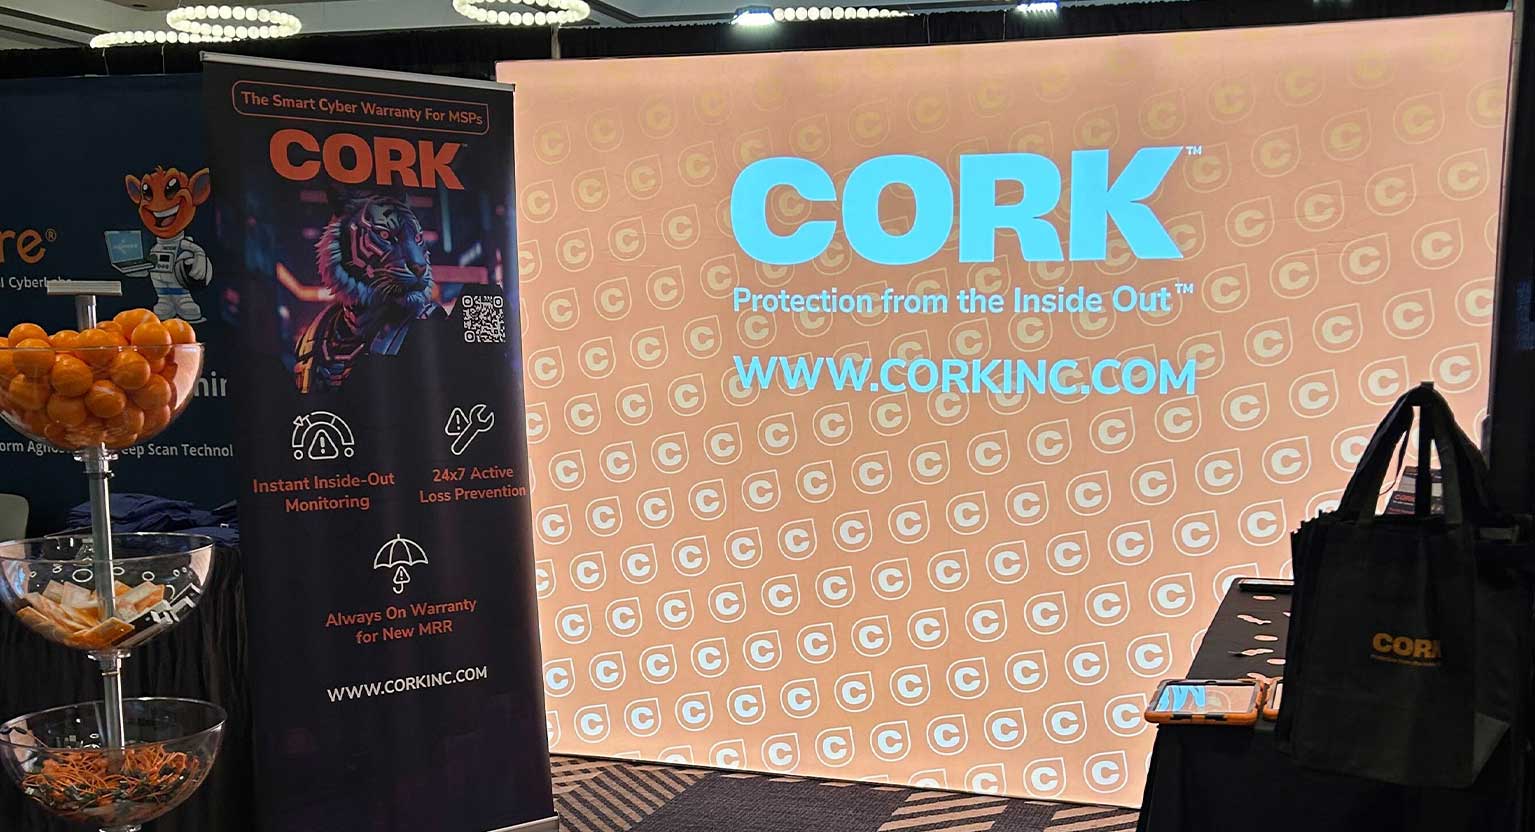 Cork 2.0 Launches As Partner Base Doubles Each Month